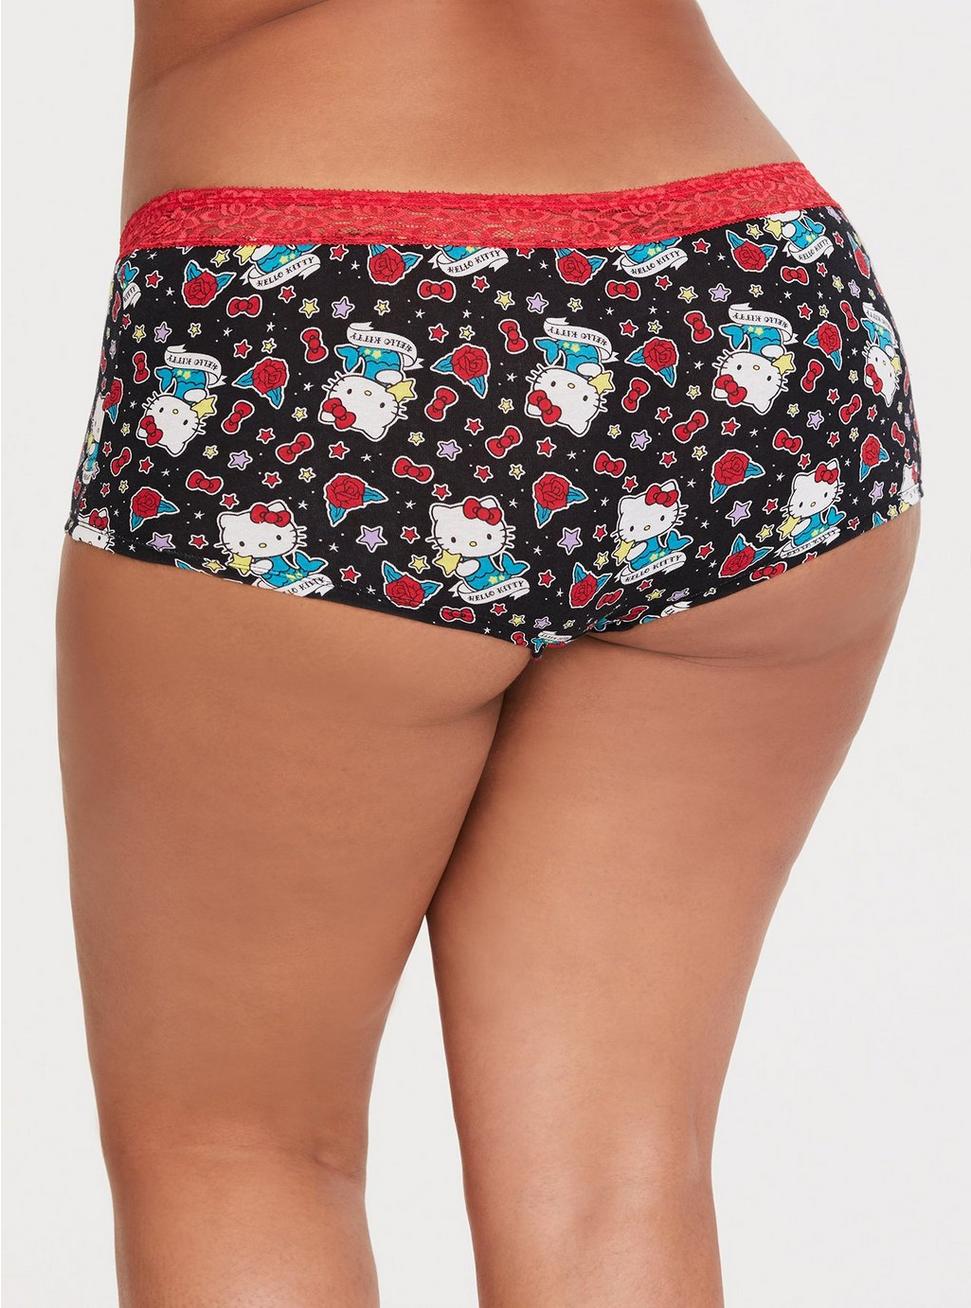 Hello Kitty Spandex Panties for Women